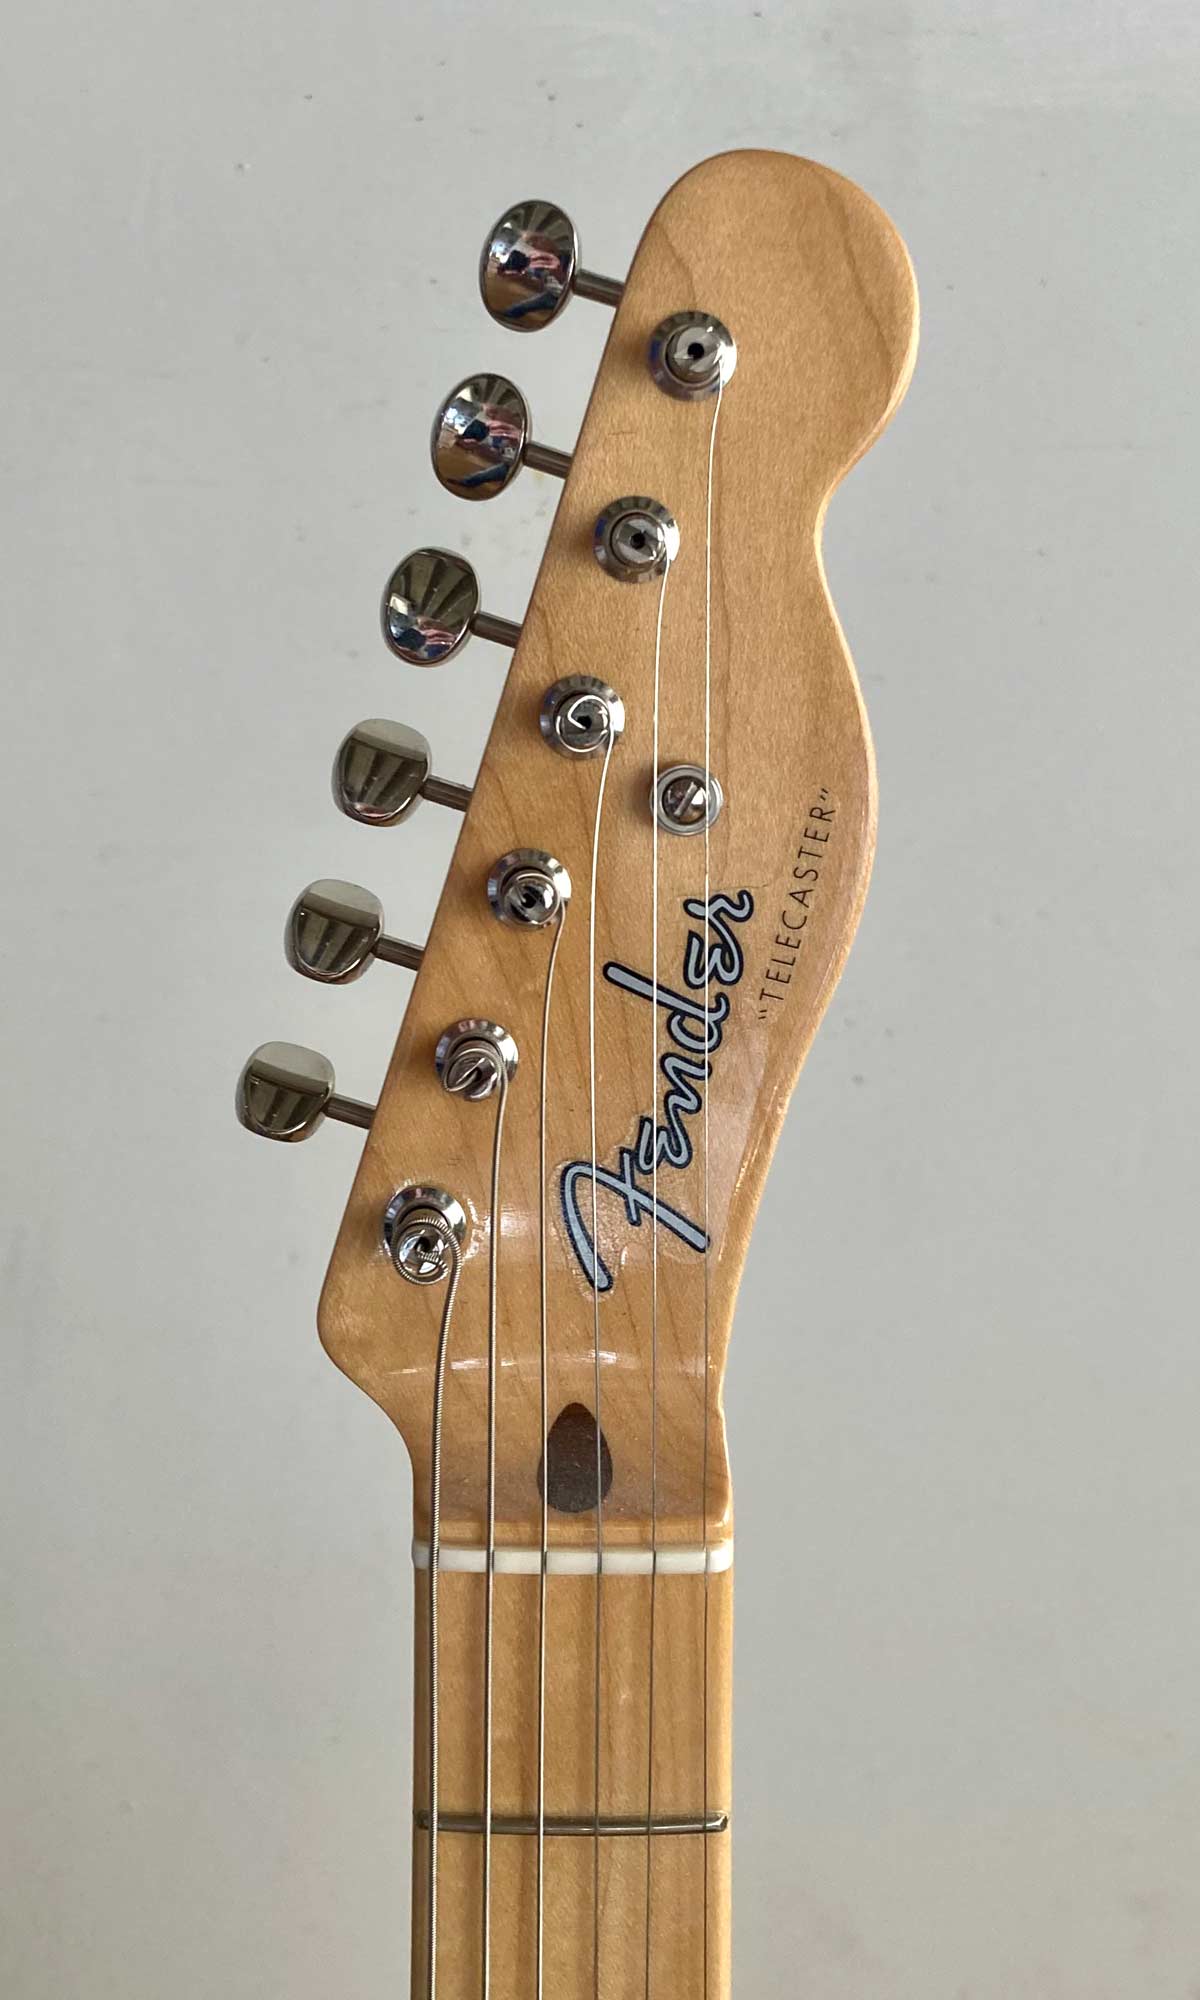 Fender "10 for '15" Limited Edition American Vintage '52 Telecaster Korina 2015